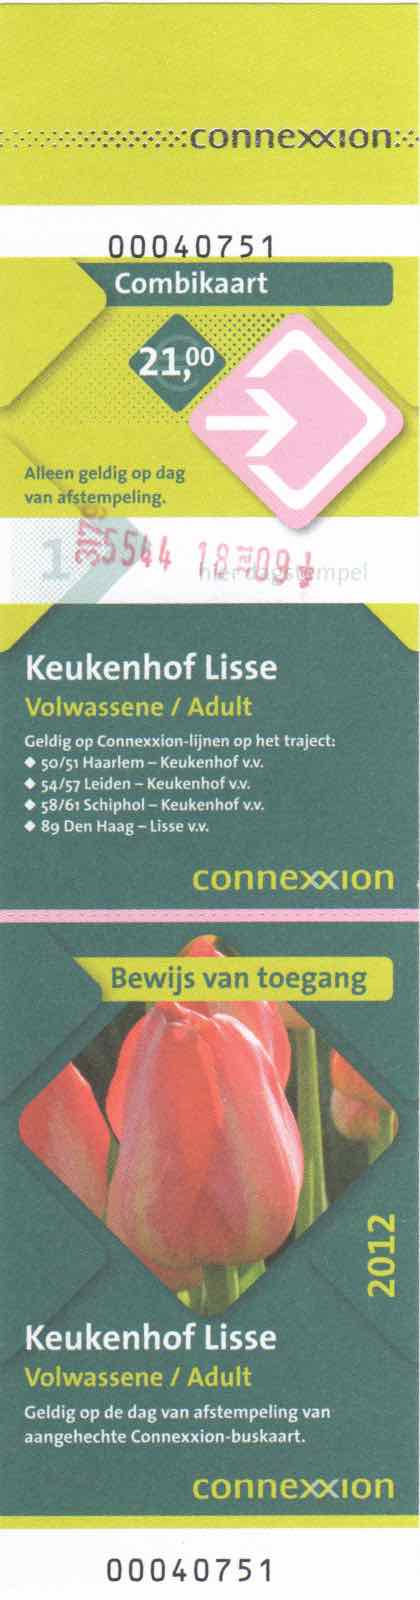 ticket for Connexxion bus and entrance to Keukenhof (2012)